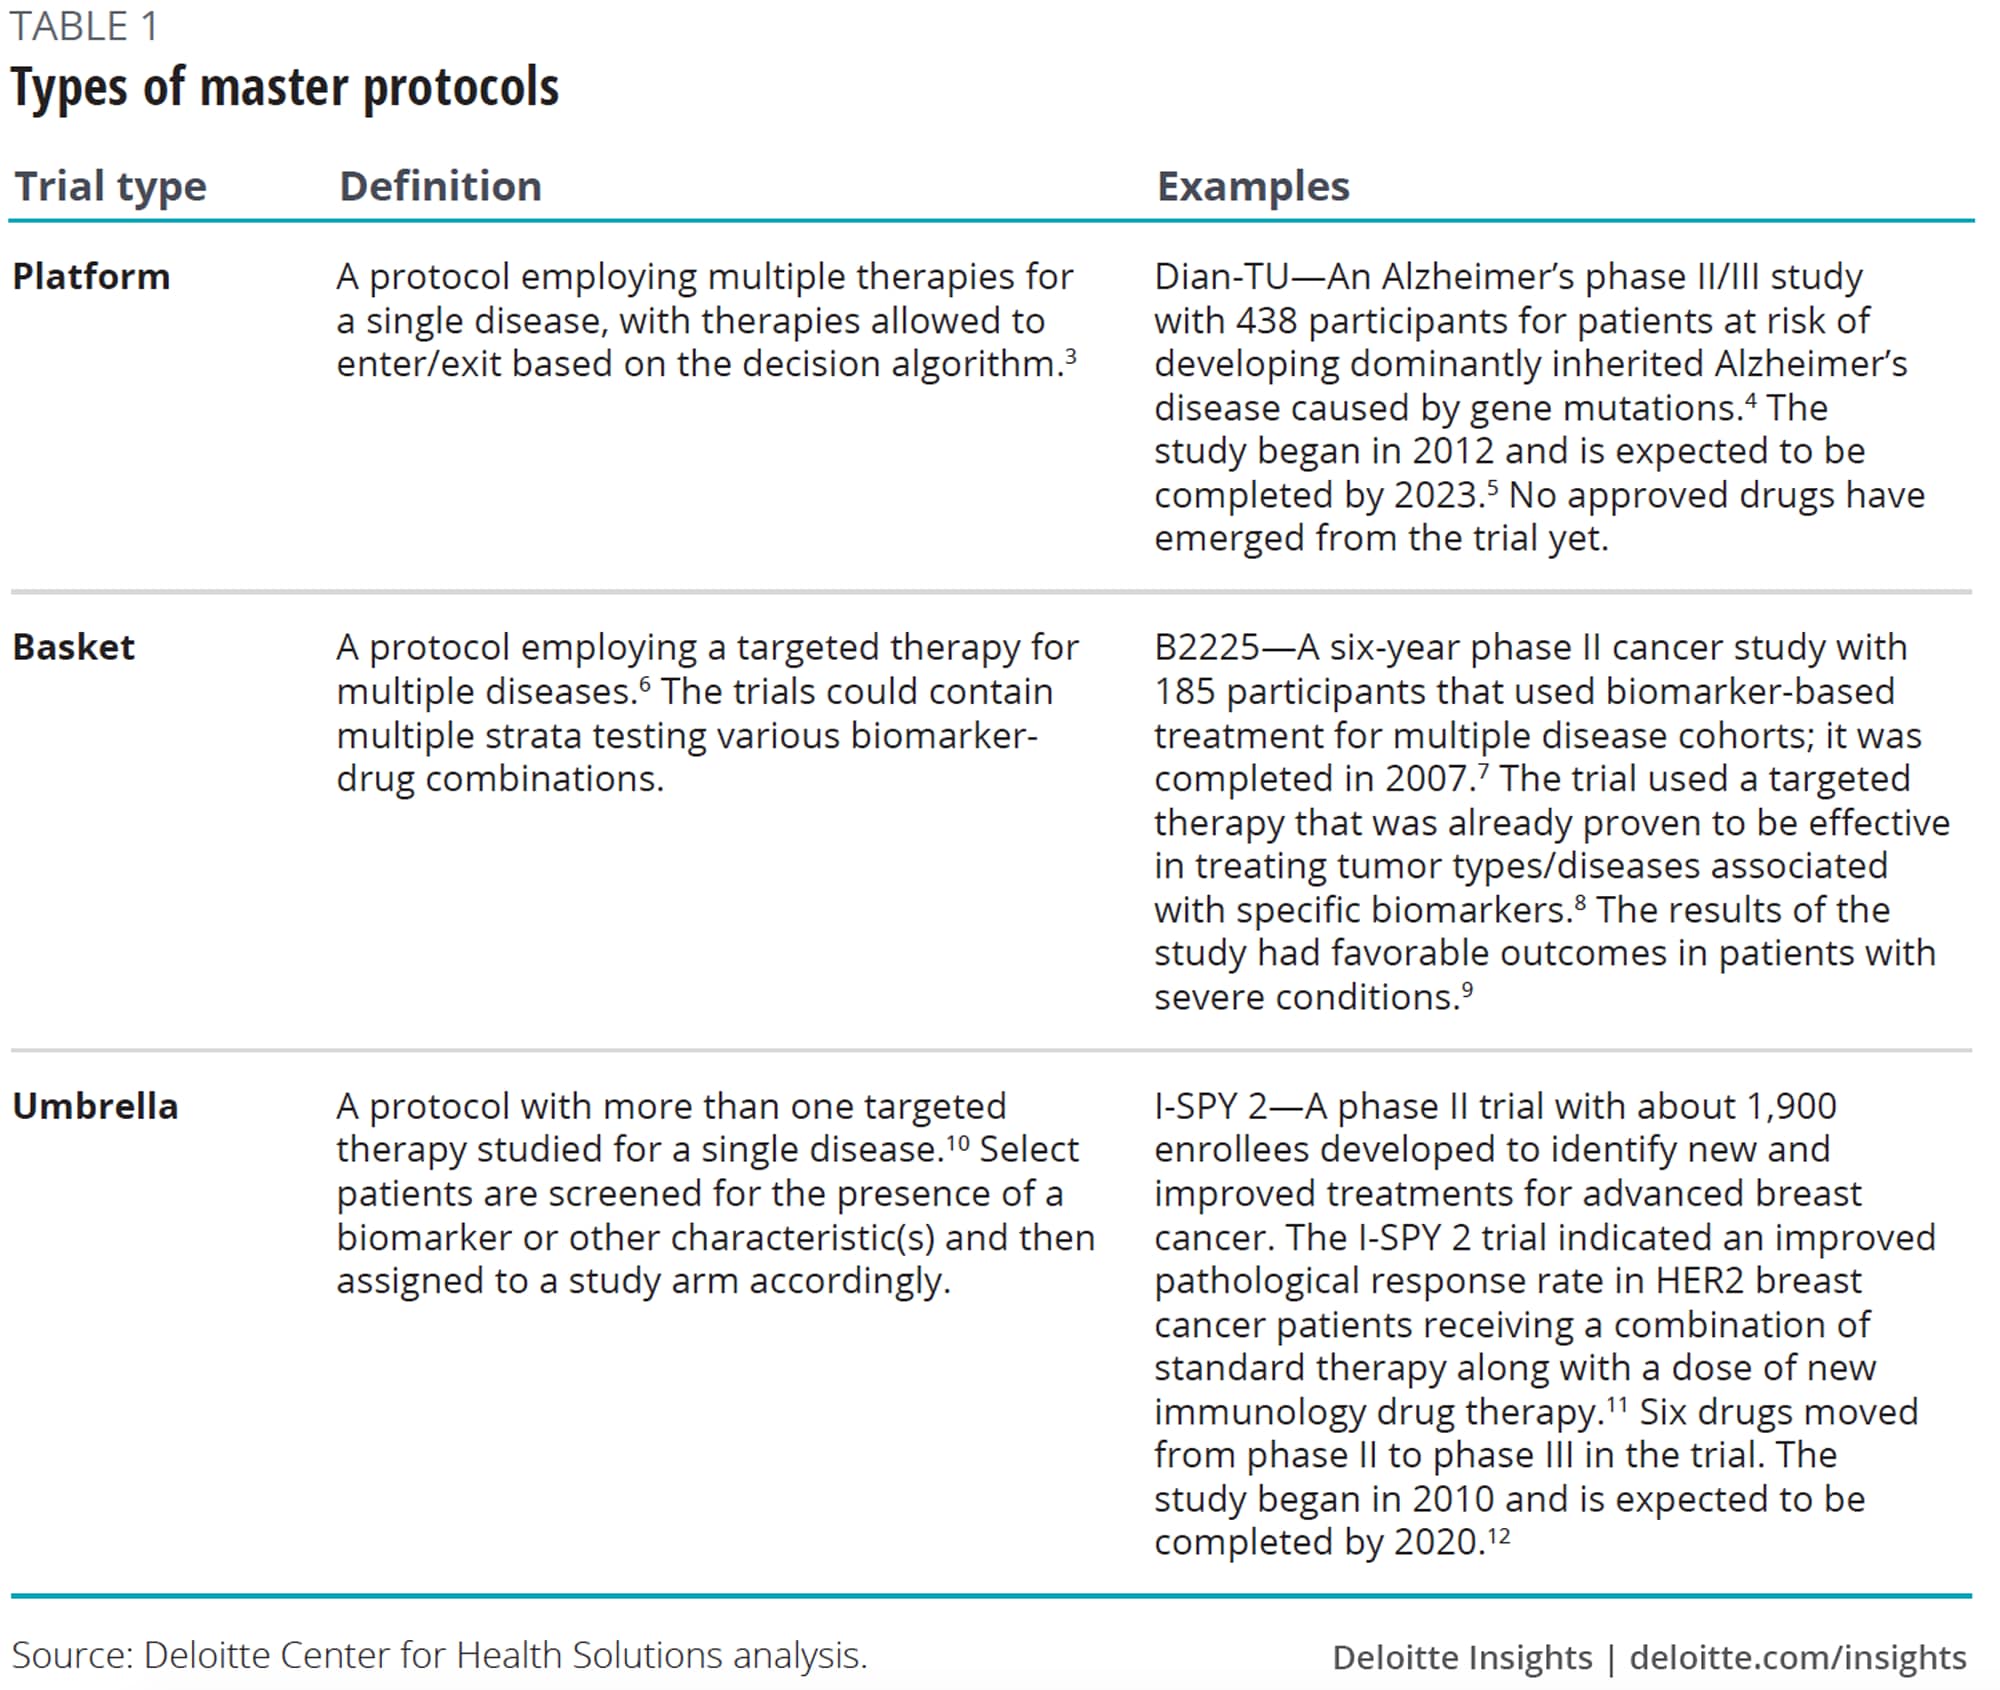 Types of master protocols